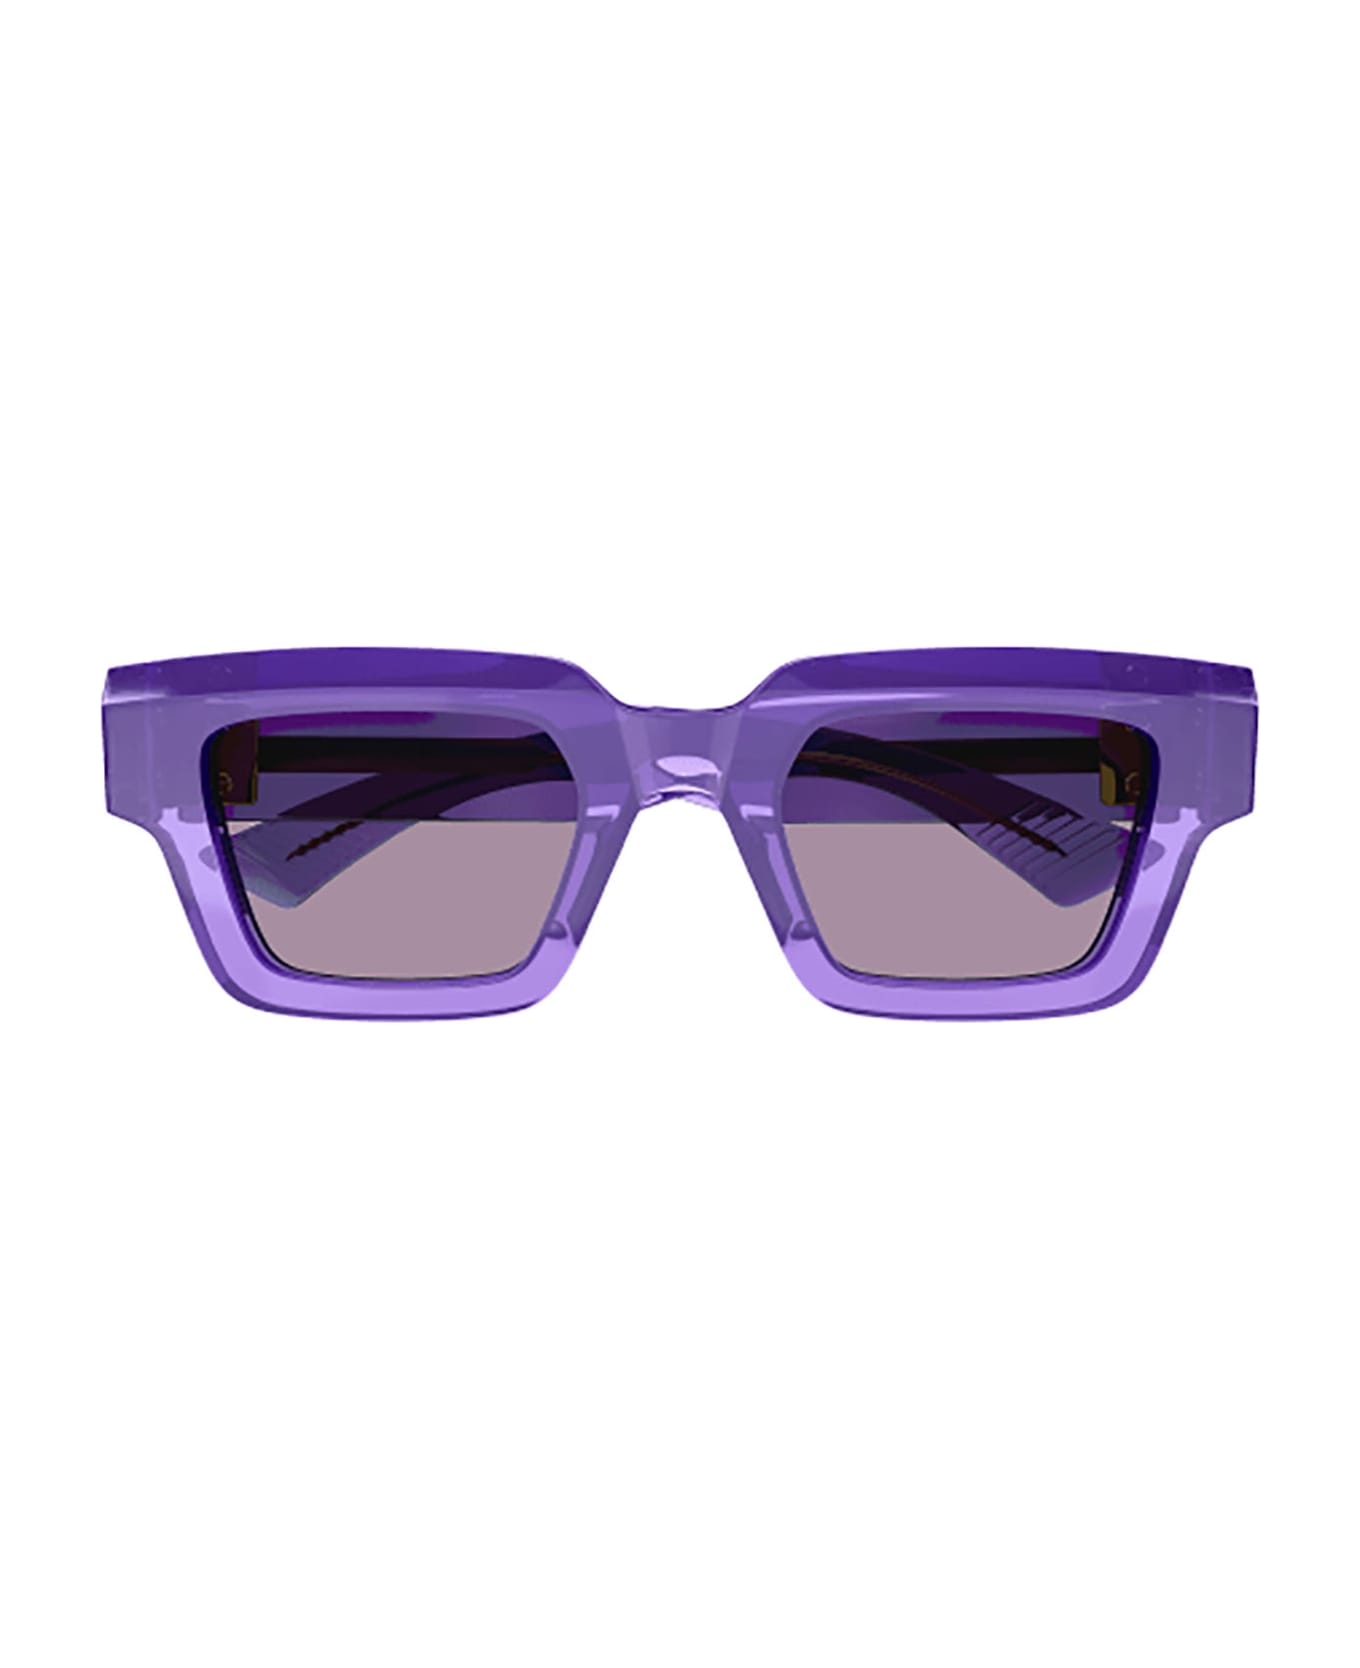 Bottega Veneta Eyewear 1g7r4ni0a - 003 violet violet violet サングラス